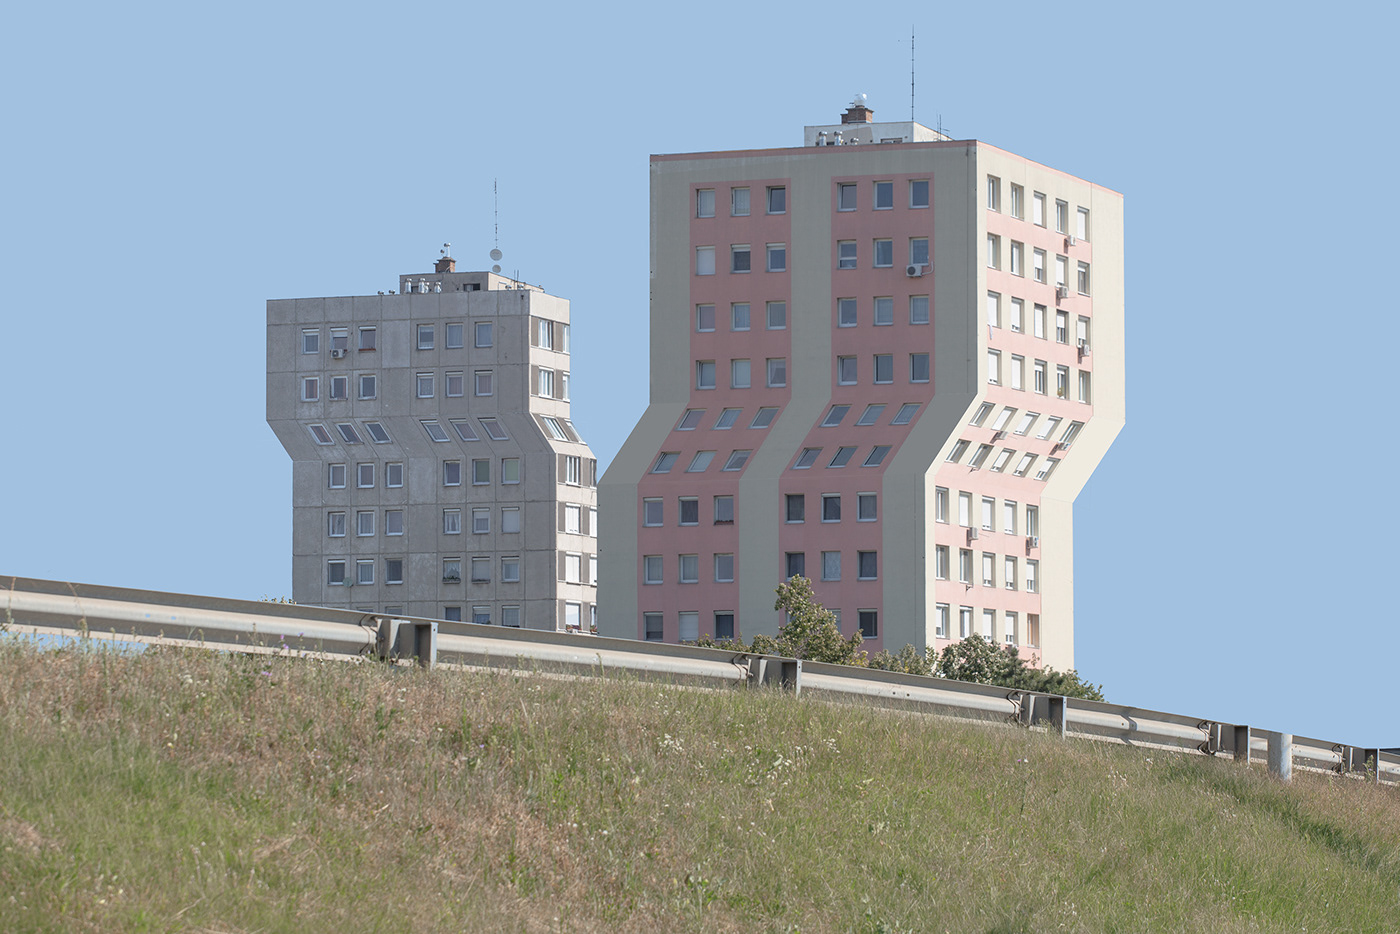 minimal Minimalism urbanism   architecture Brutalism budapest building abstract city Urban